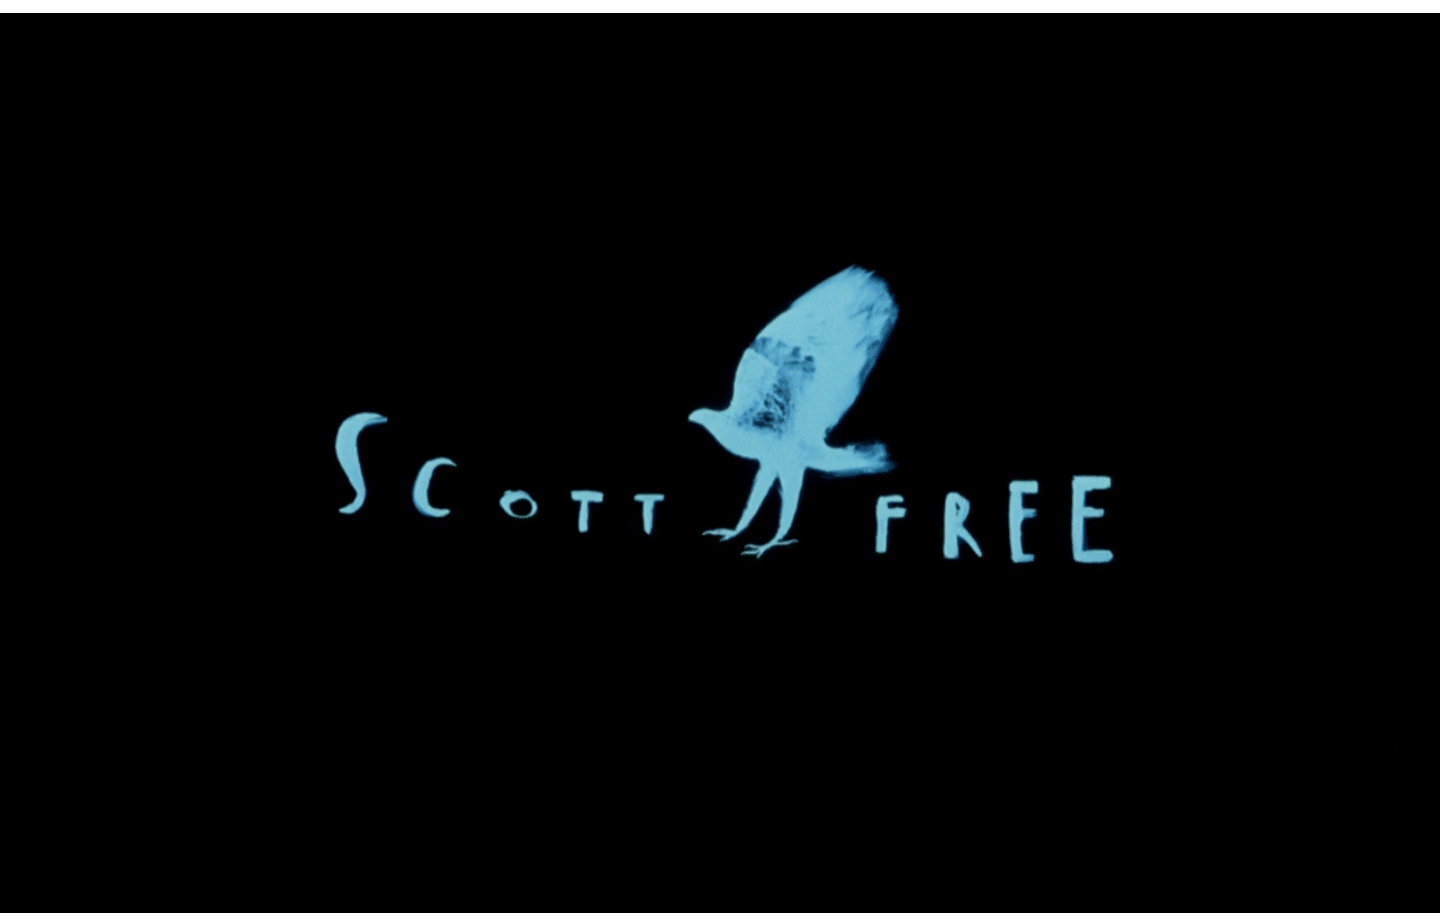 Scott Free, produtora do cineasta Ridley Scott